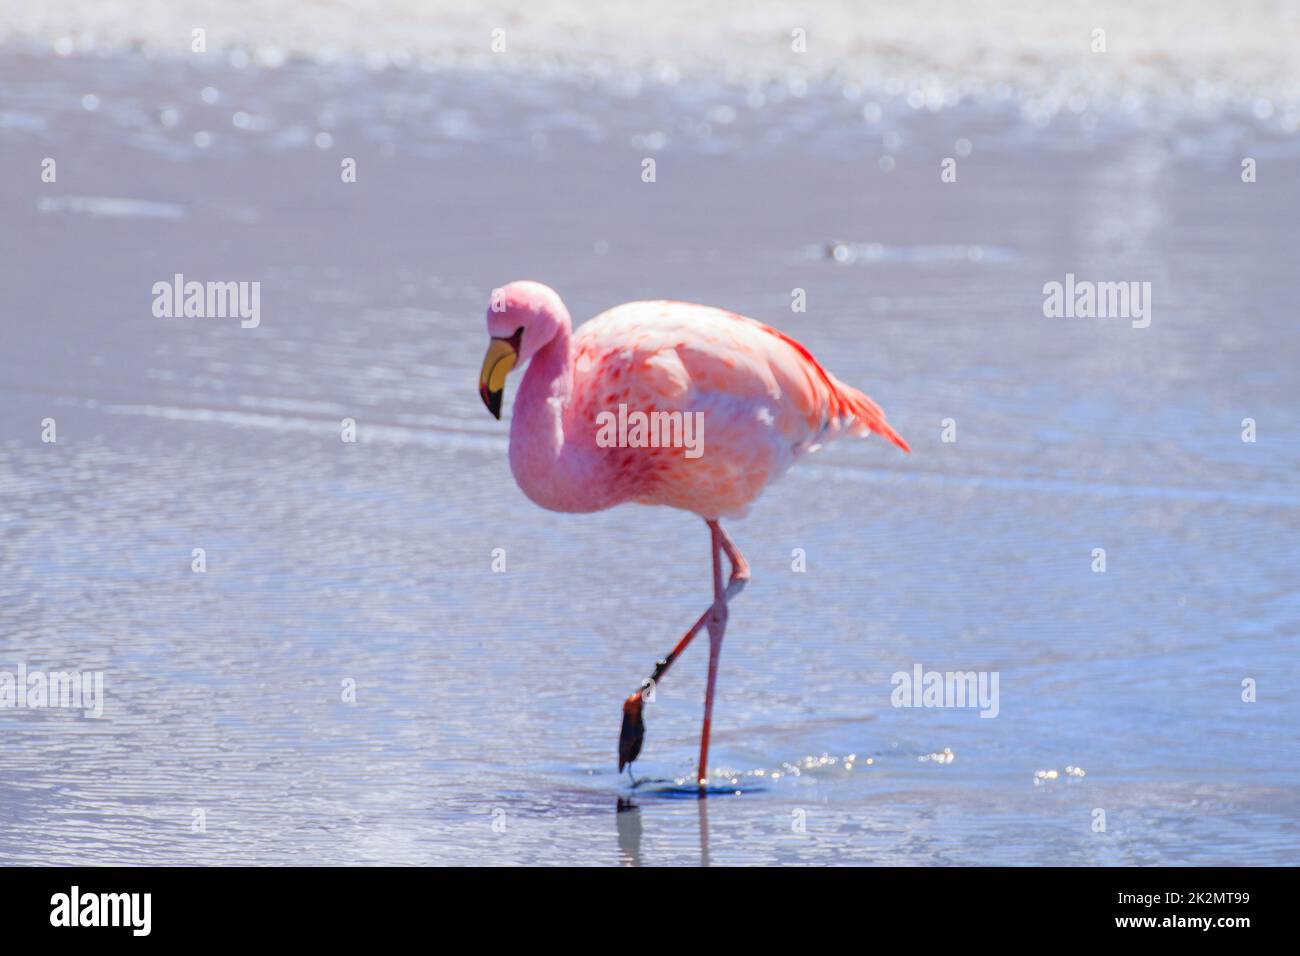 Laguna Hedionda Flamingos, Bolivien Stockfoto